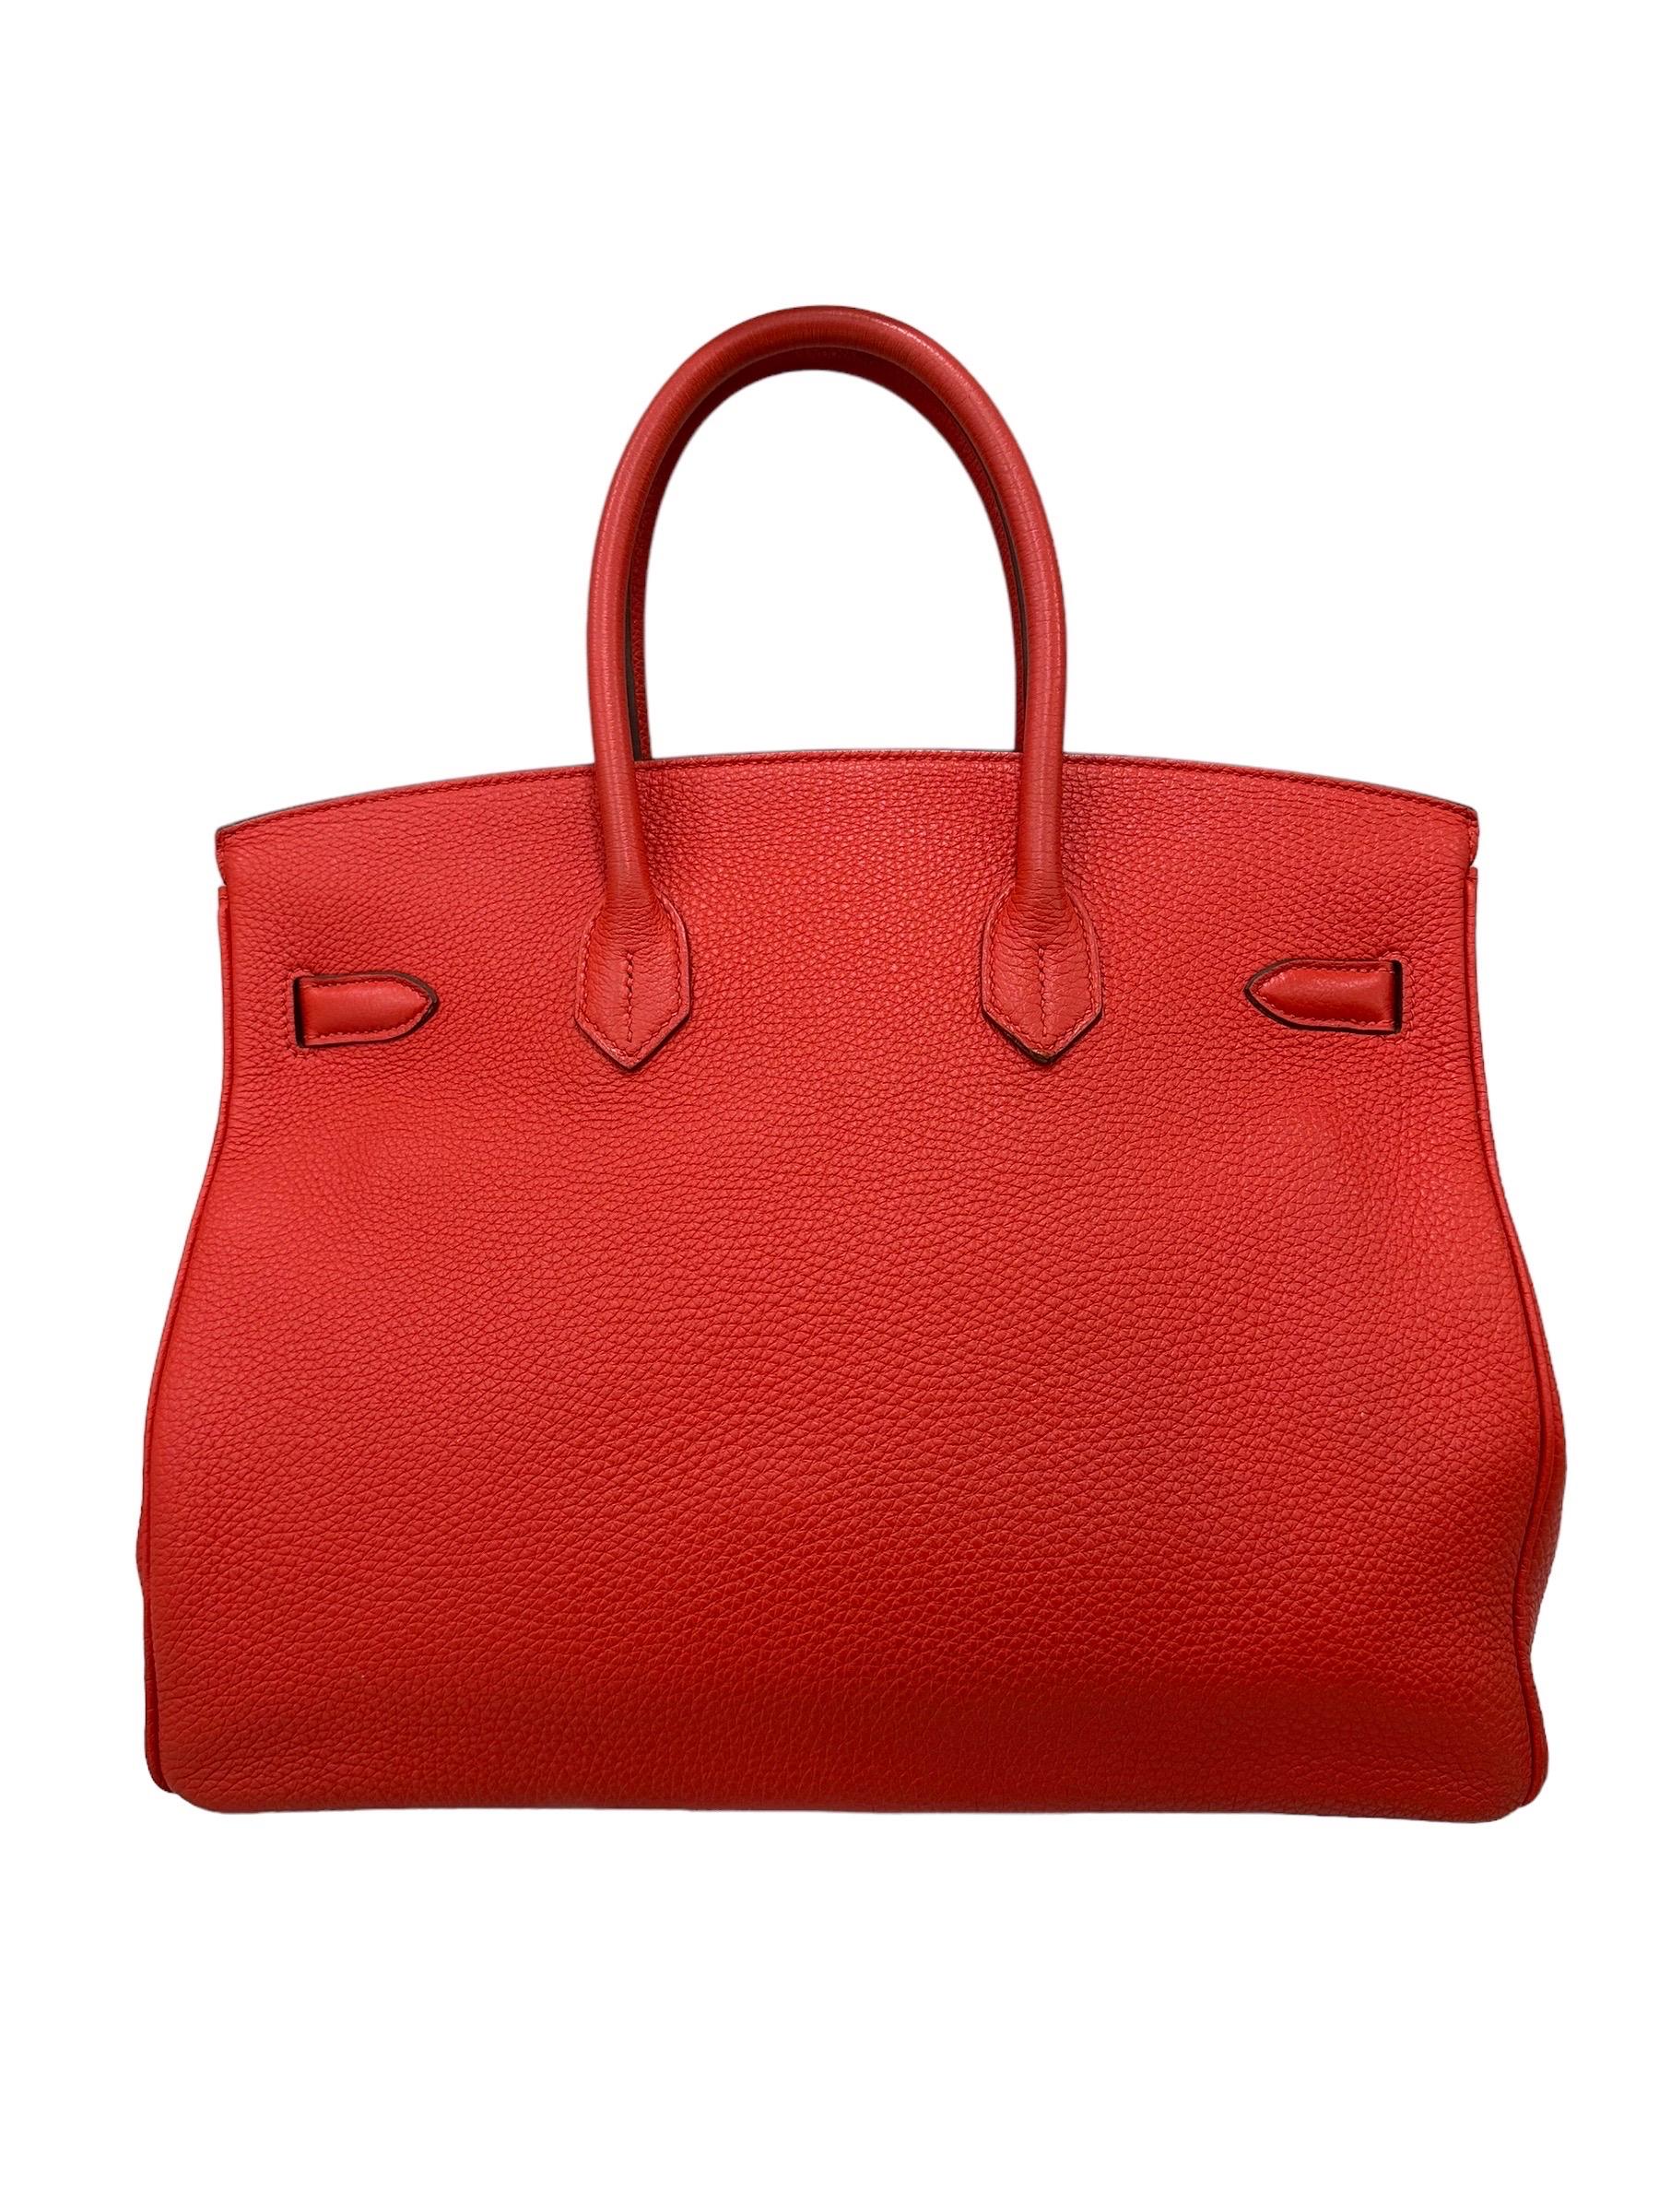 2011 Hermès Birkin 35 Togo Leather Rouge Capucine Top Handle Bag For Sale 2